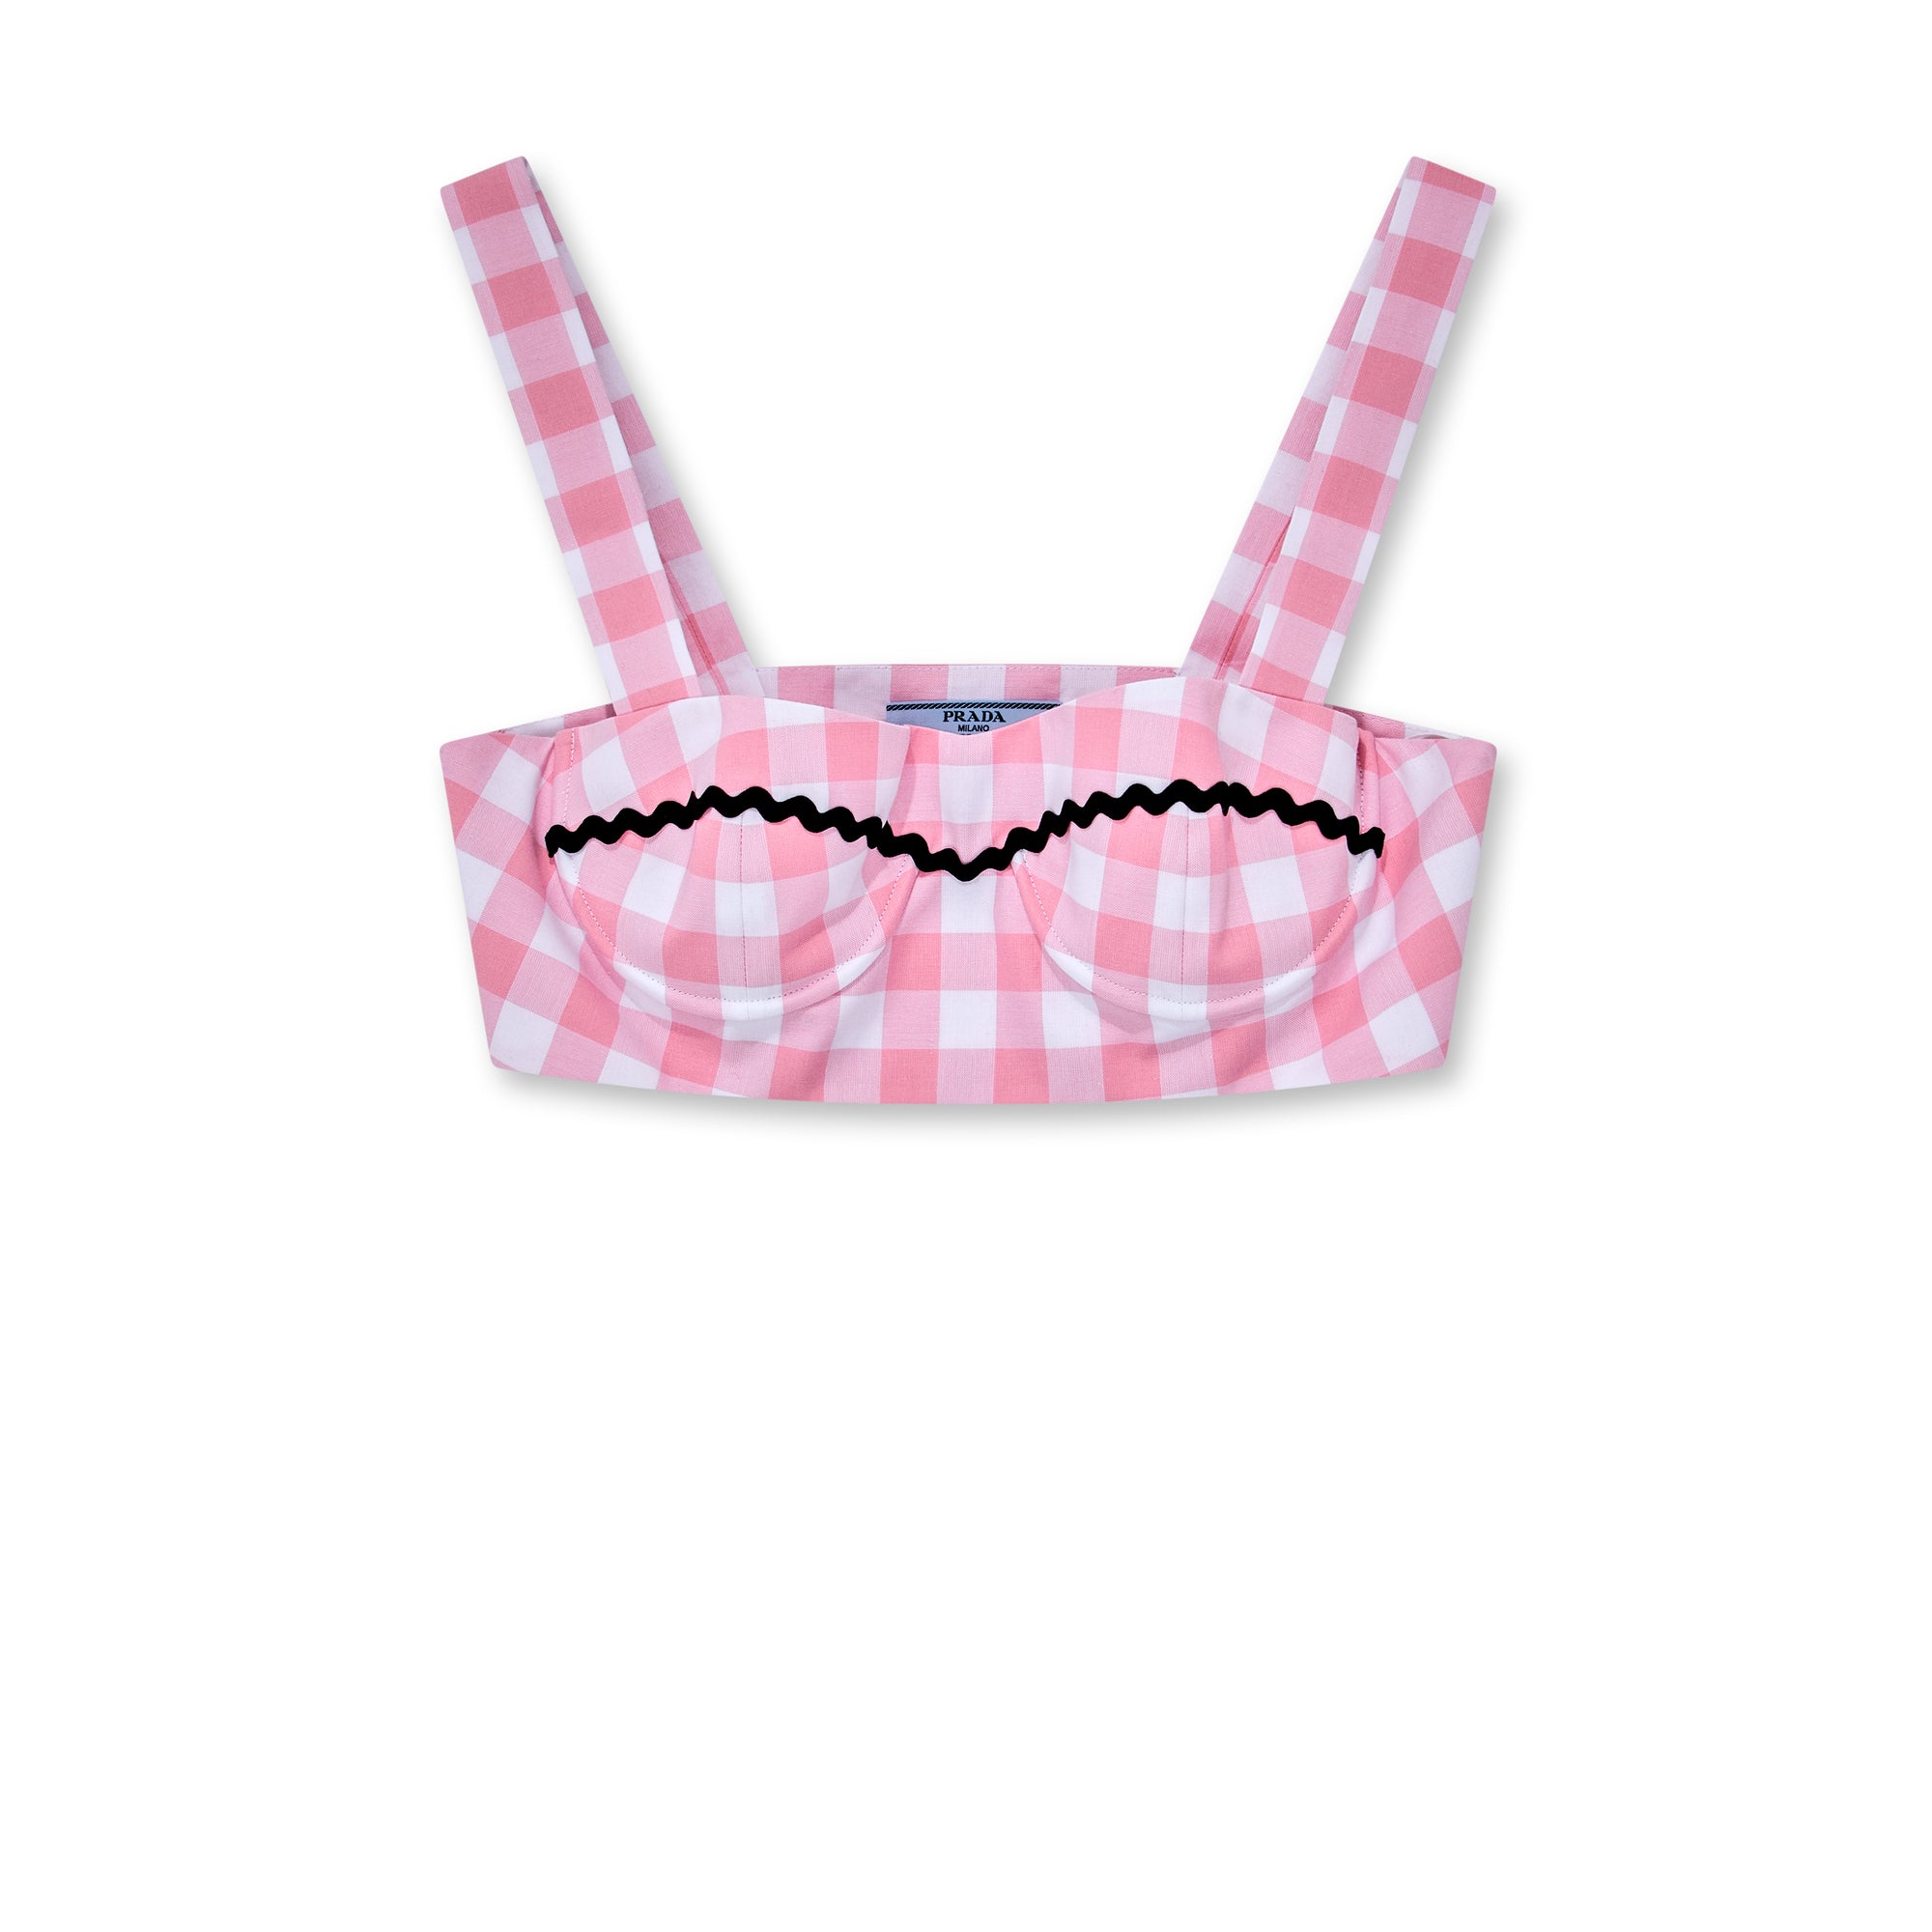 Prada - Women’s Gingham Check Bralette Top - (Pink/Black) view 1